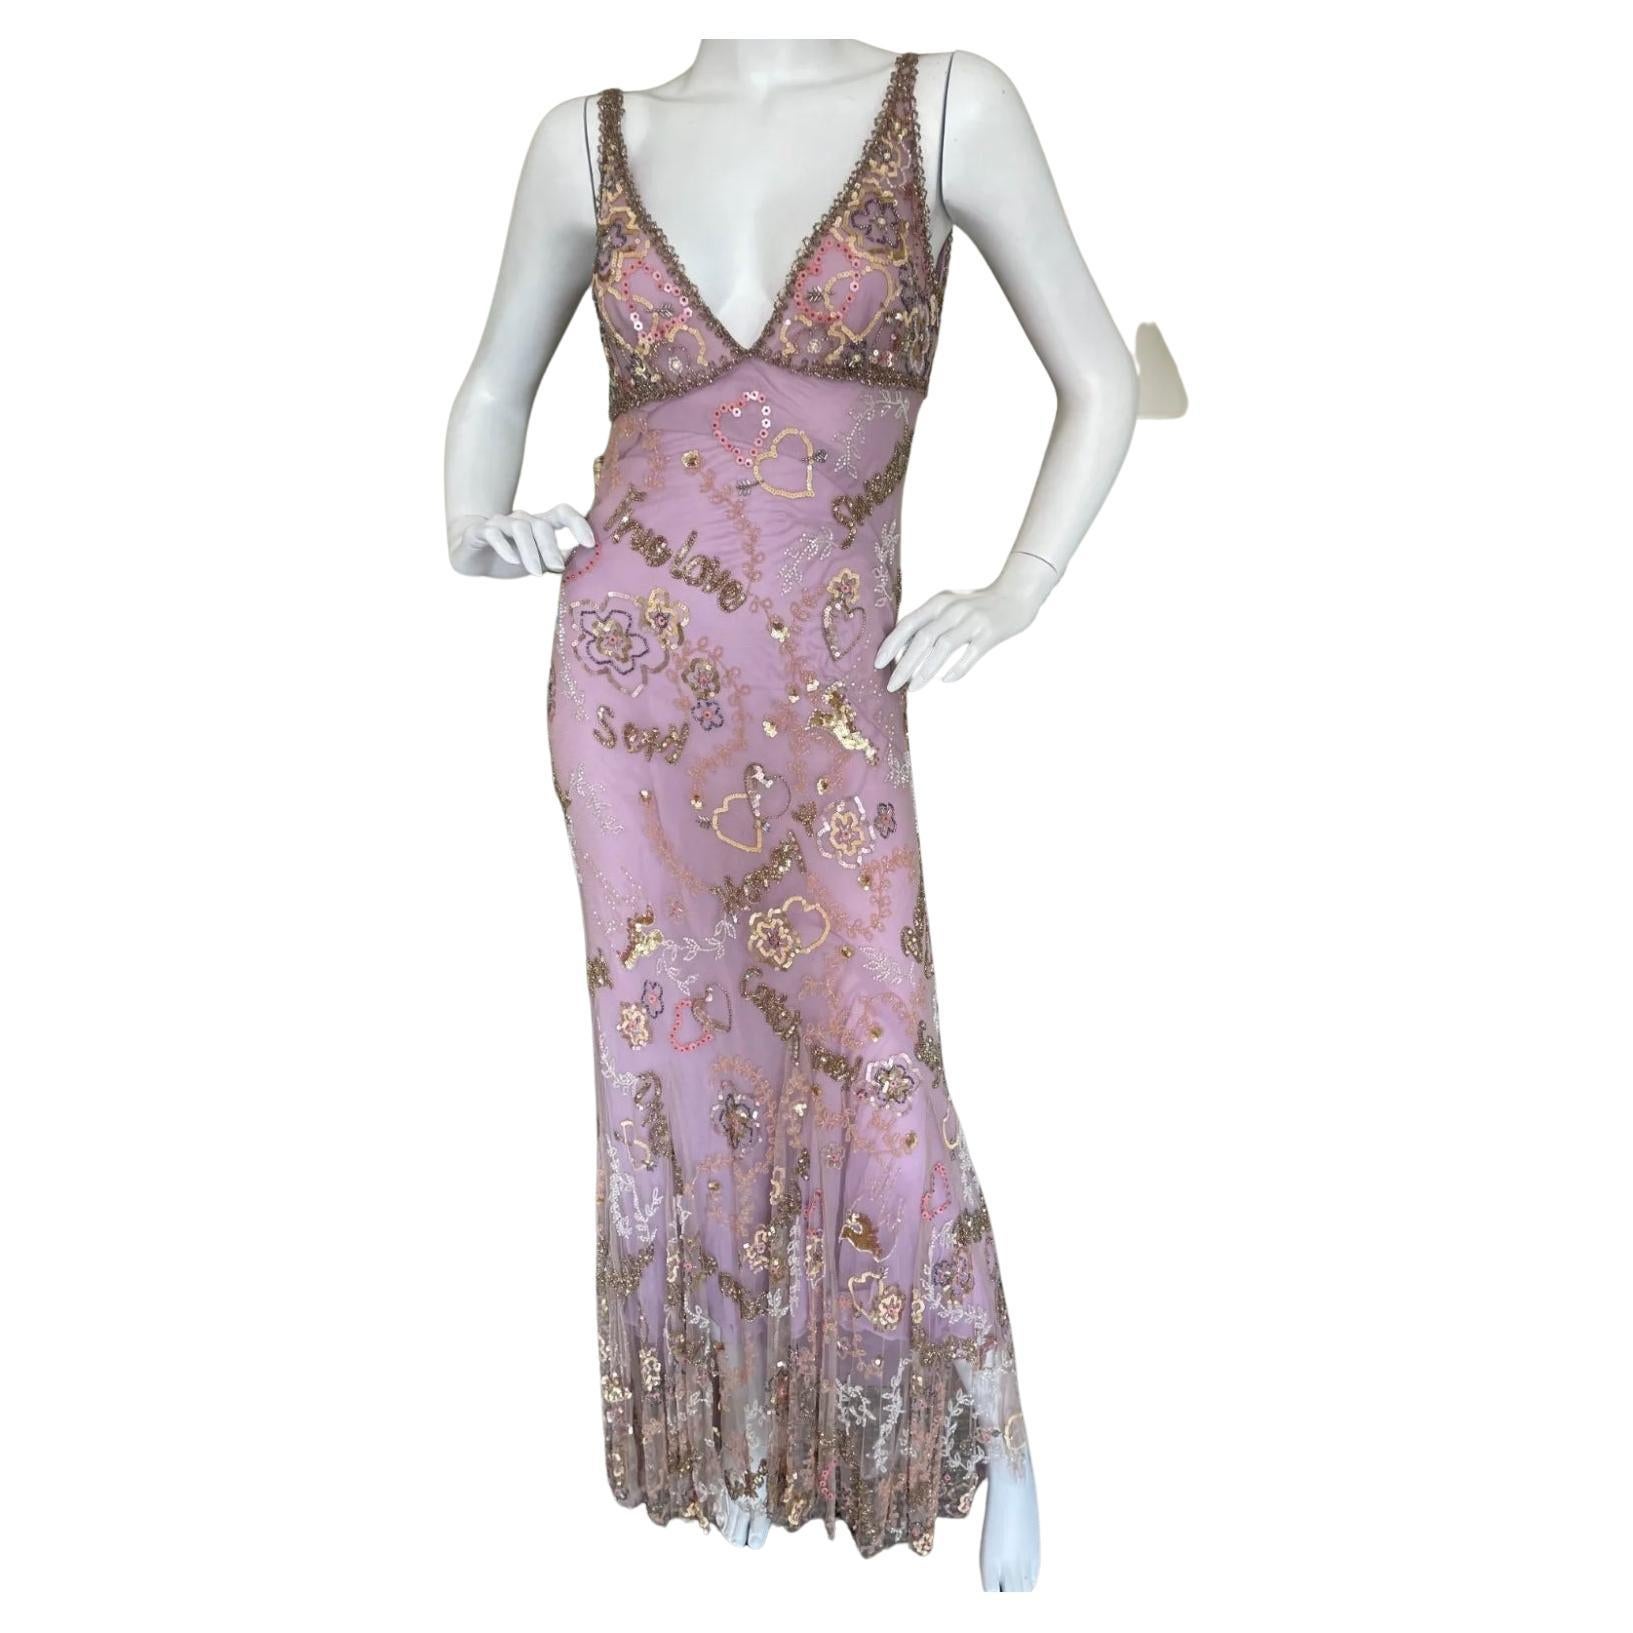 Jenny Packham "True Love" Sequin Embellished Evening Dress NWT For Sale